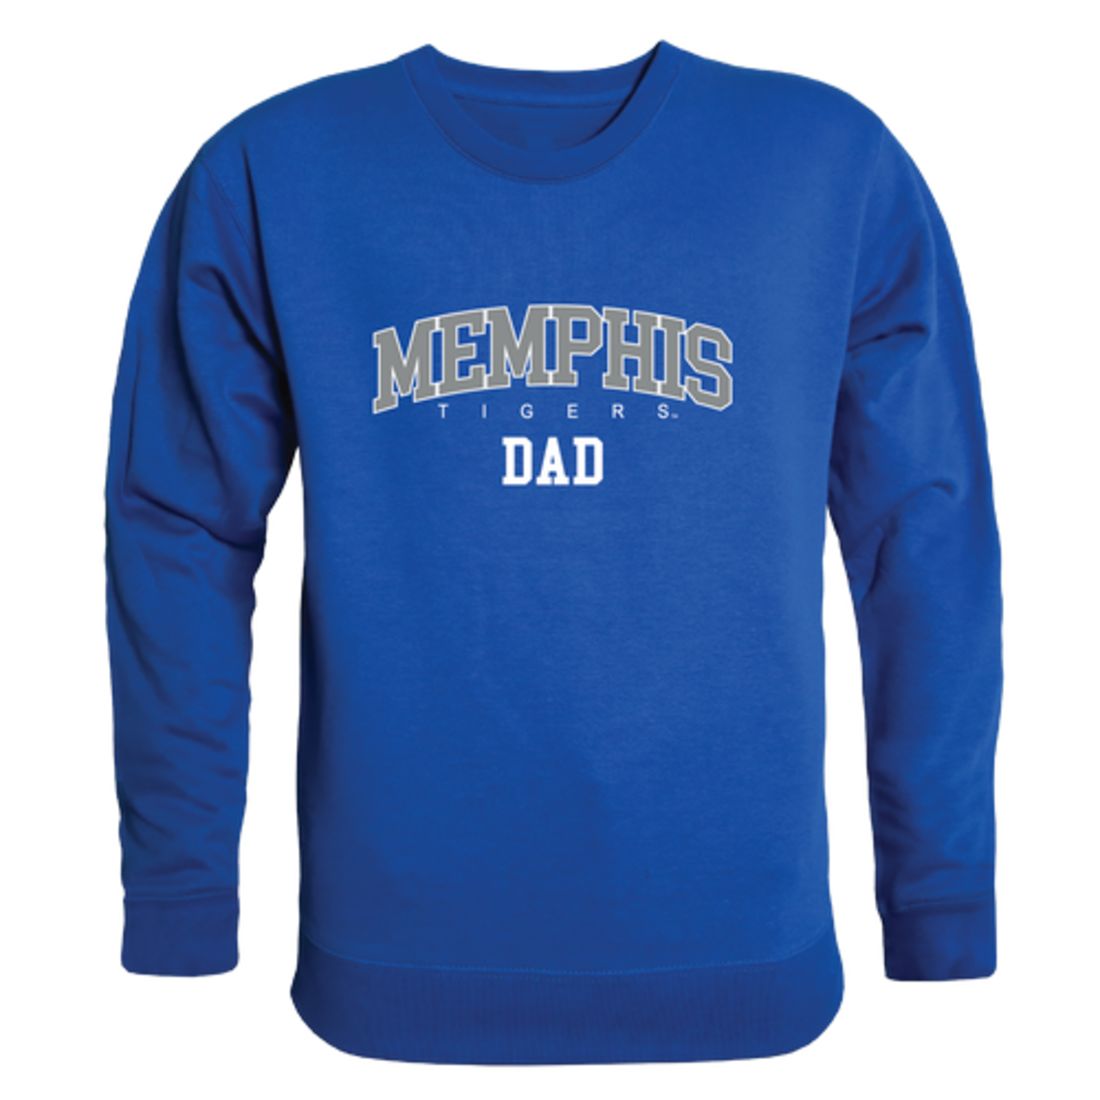 Menphis Tigers Dad Fleece Crewneck Pullover Sweatshirt